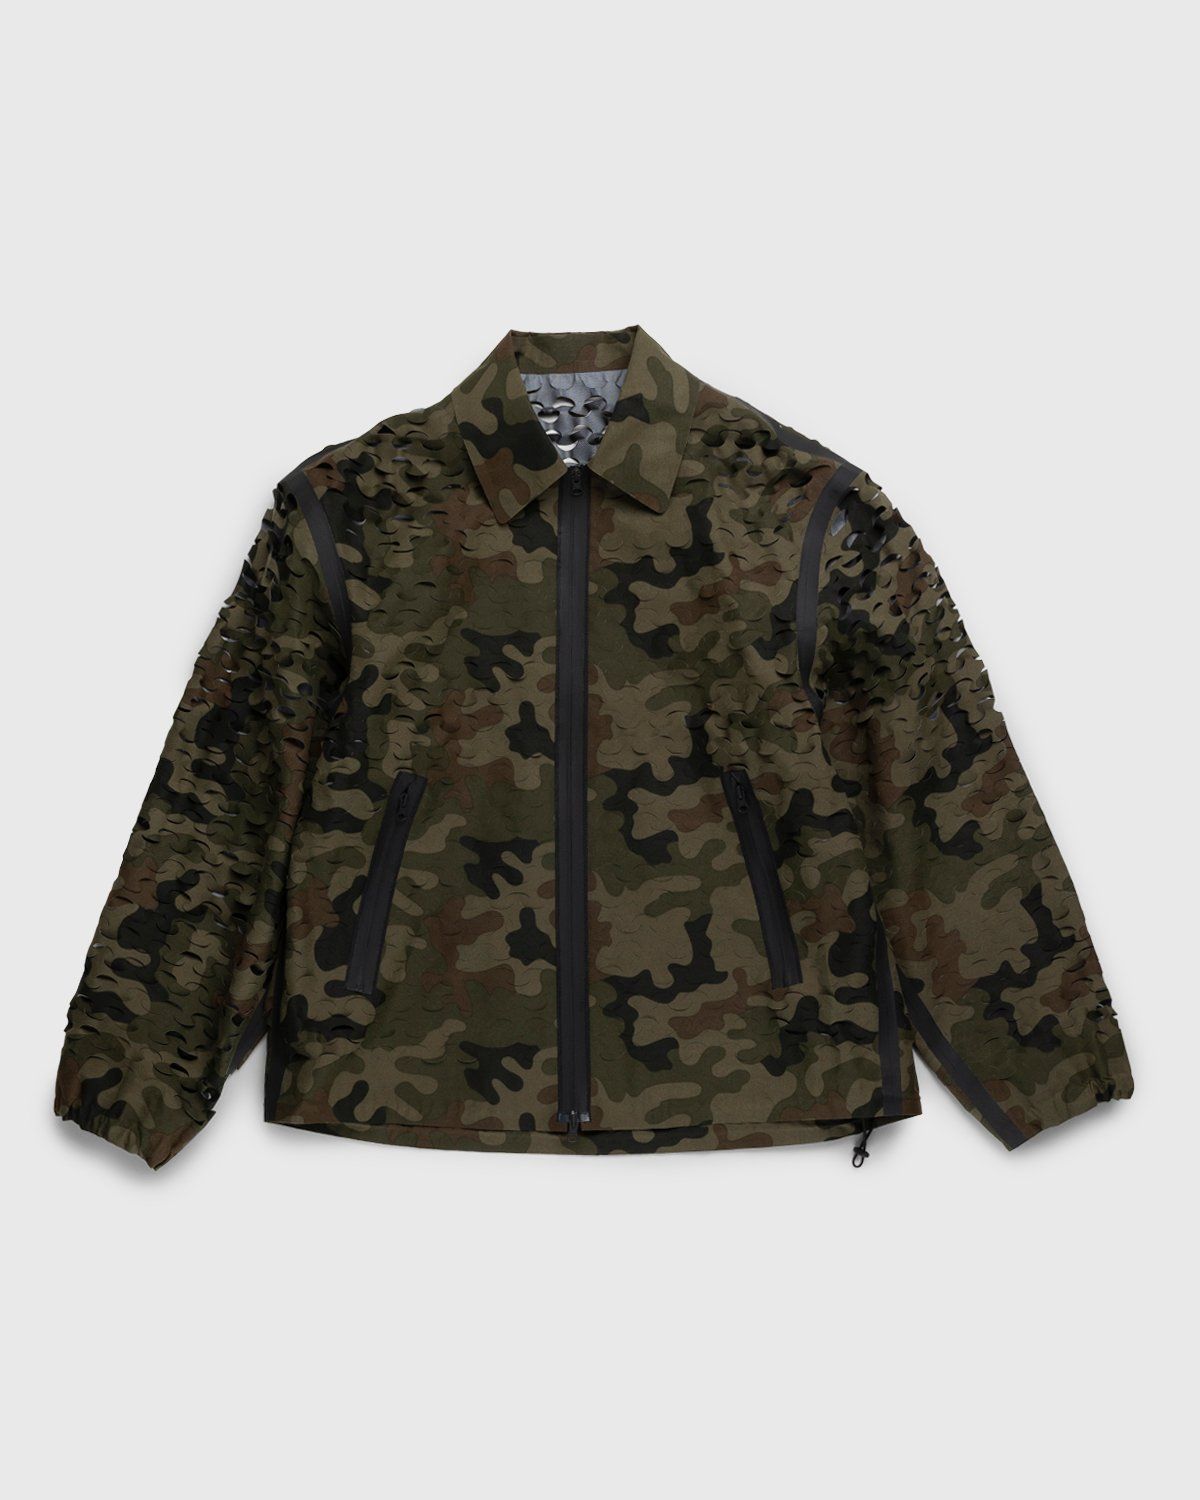 Dries van Noten – Voyde Laser Jacket Camouflage - Jackets - Brown - Image 1